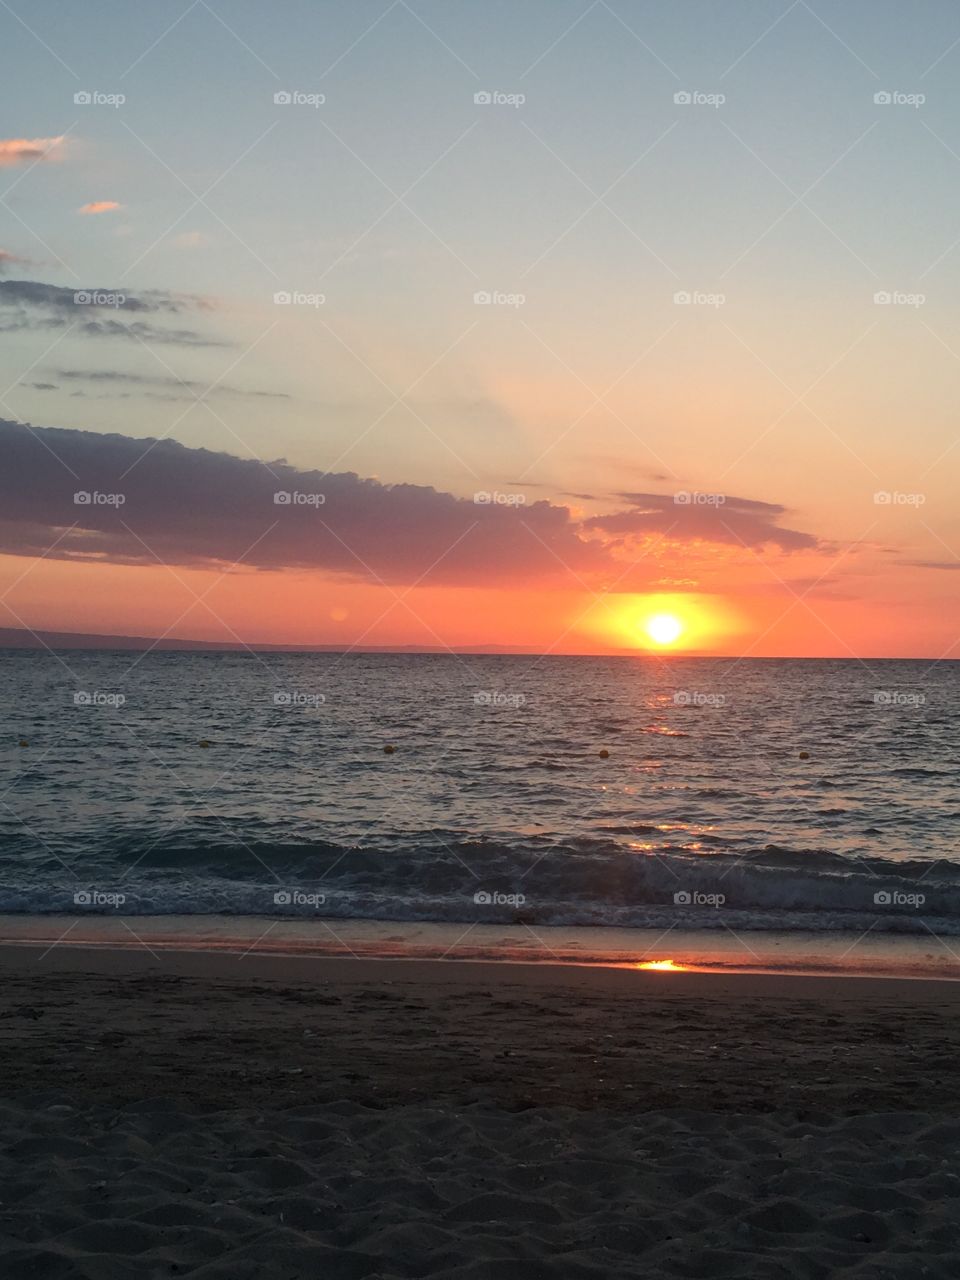 Sunset over the ocean... 